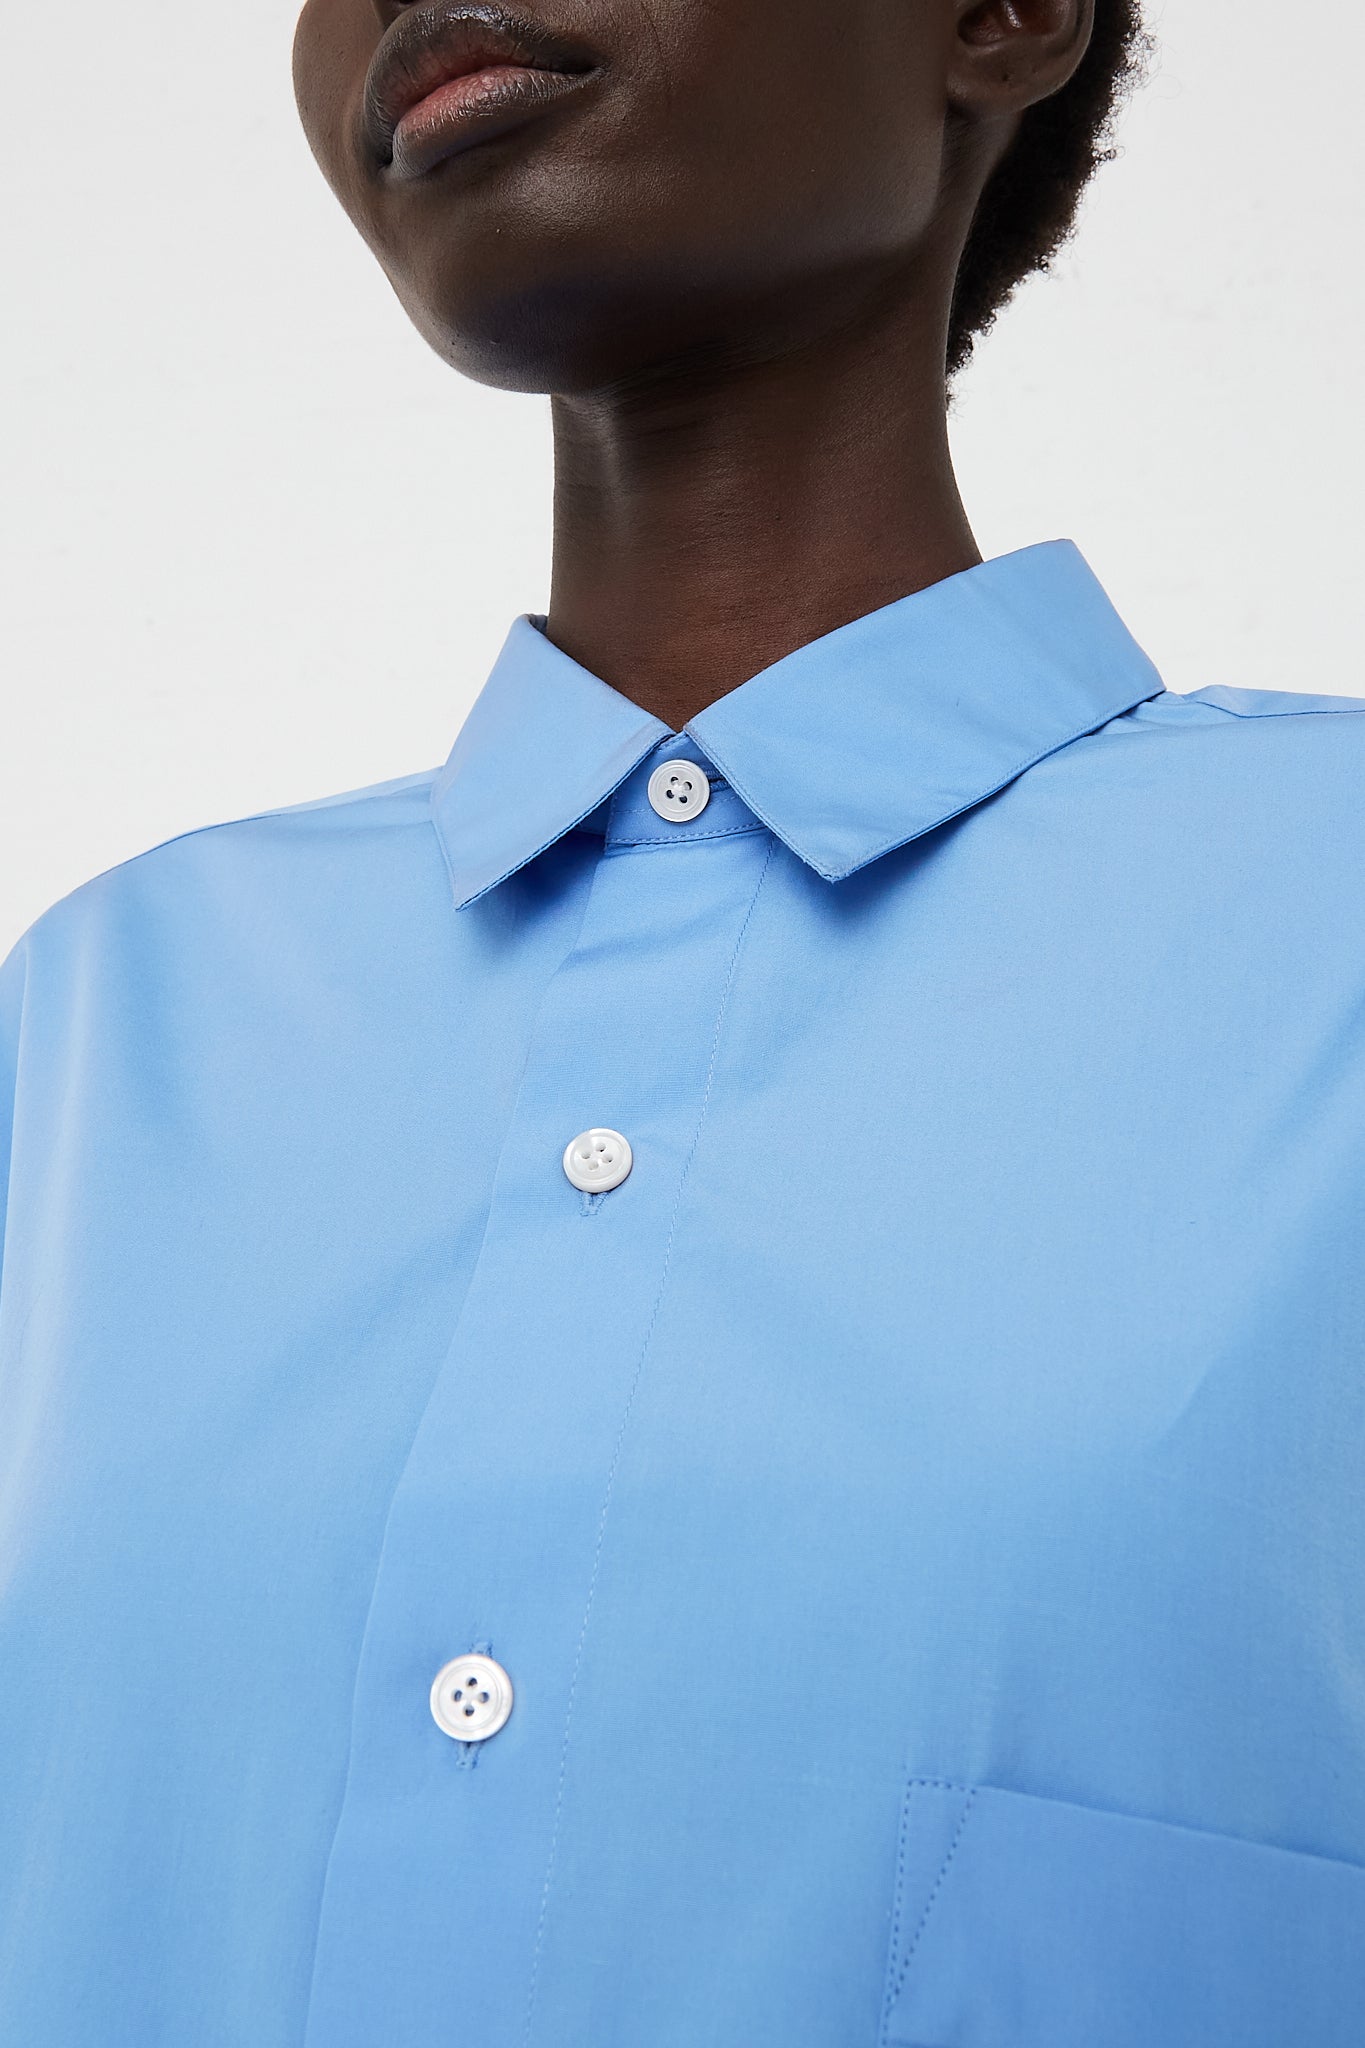 Handmade Popeline Men's Shirt by CristaSeya for Oroboro Front Upclose Button Detail